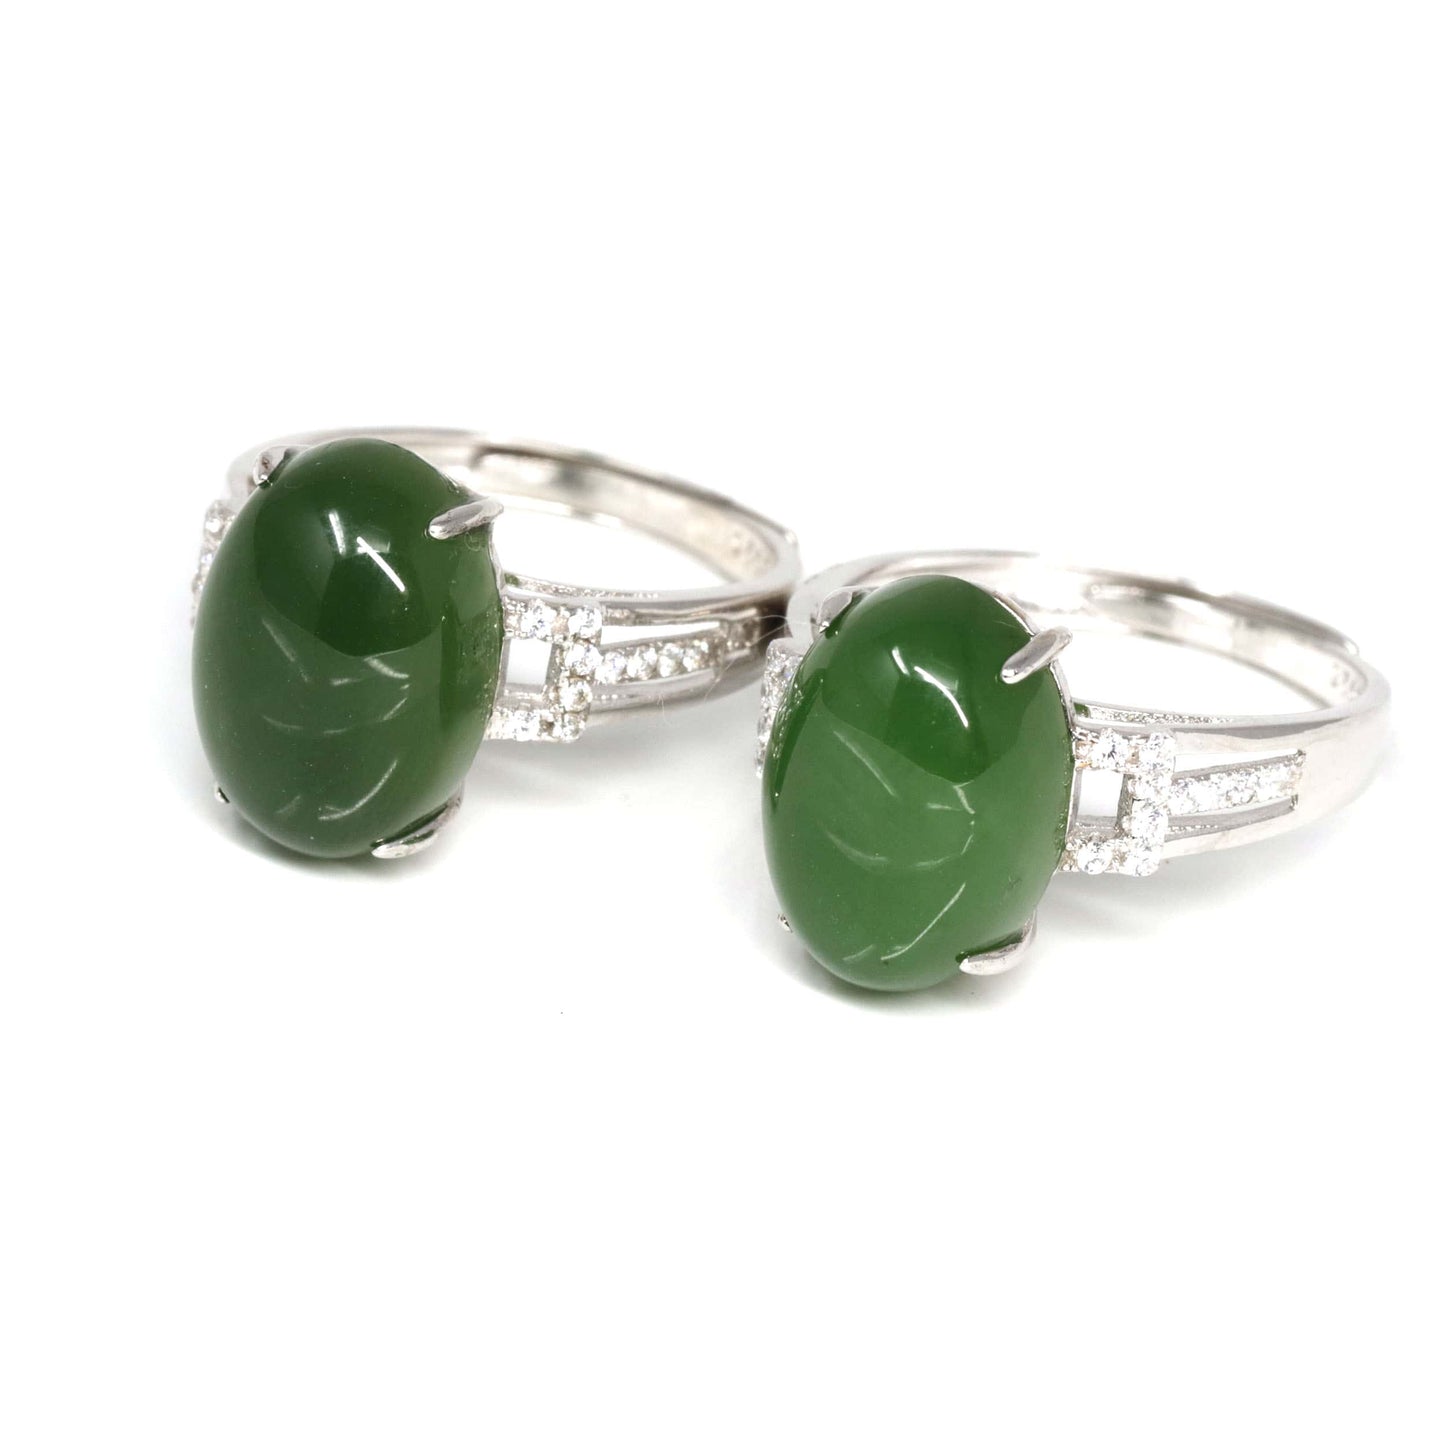 RealJade Natural Jadeite, Nephrite Jade Jewelry. Authentic, Grade-A Jade